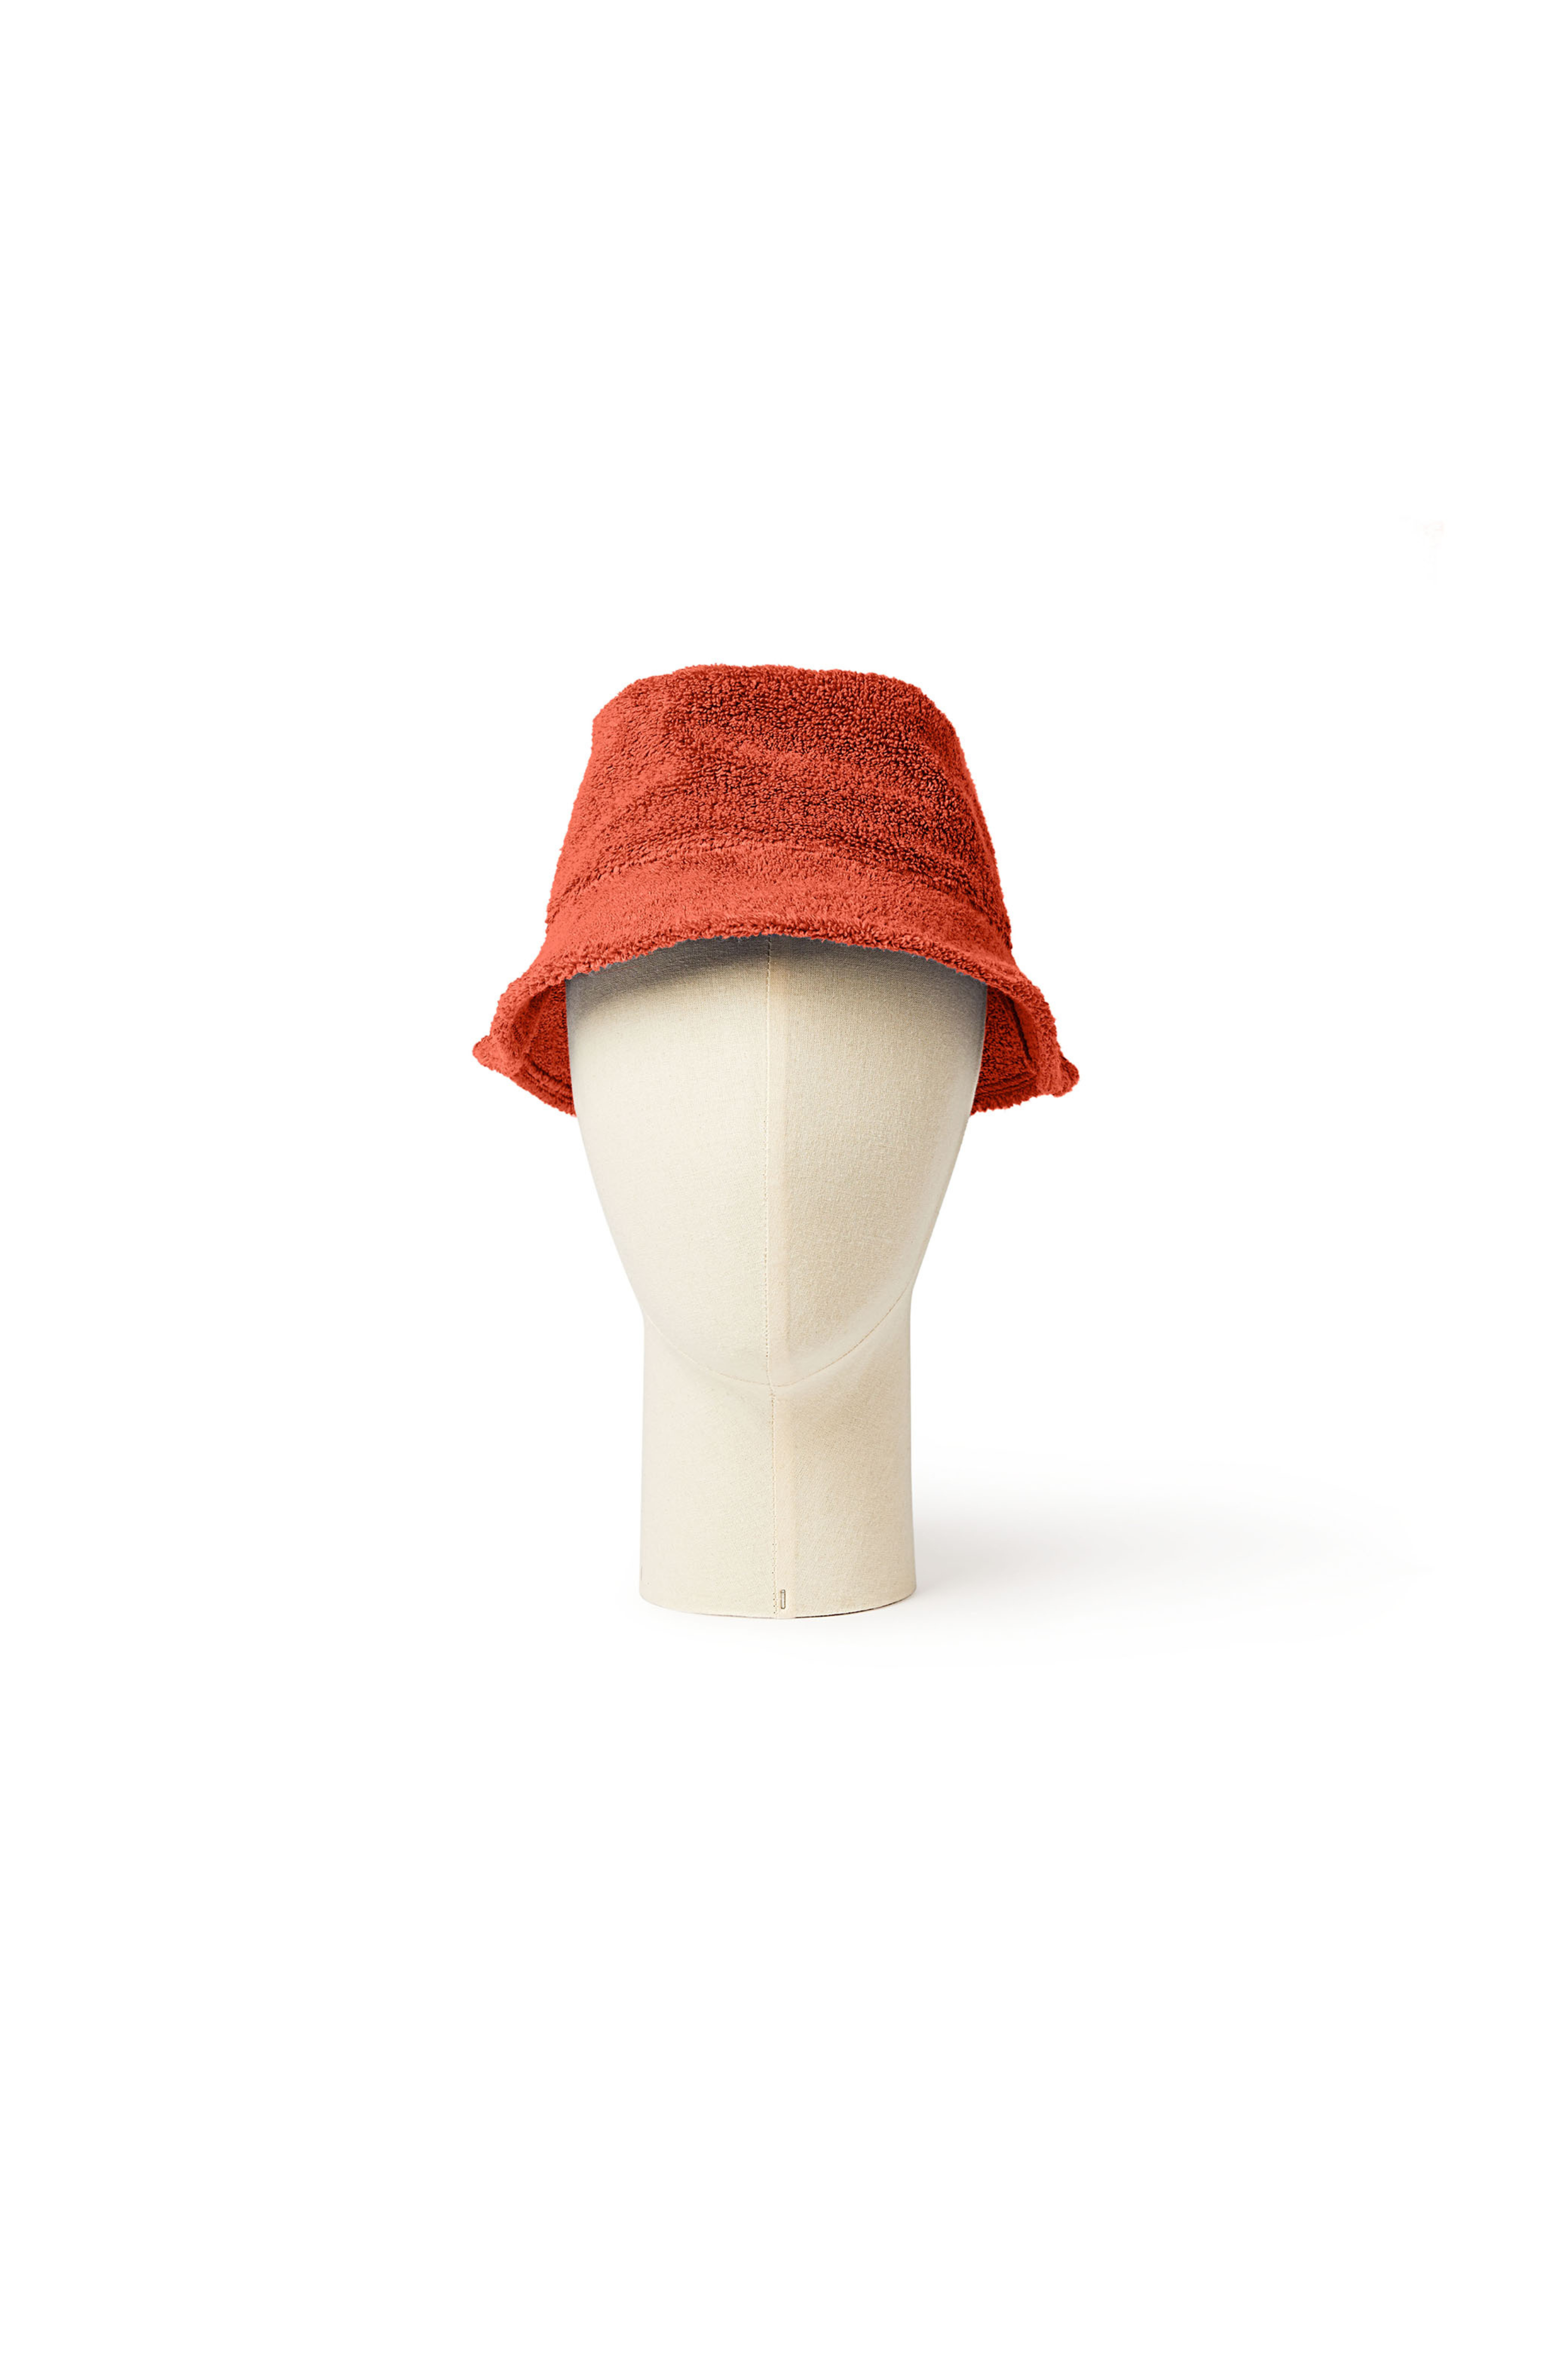 Terracotta sun hat